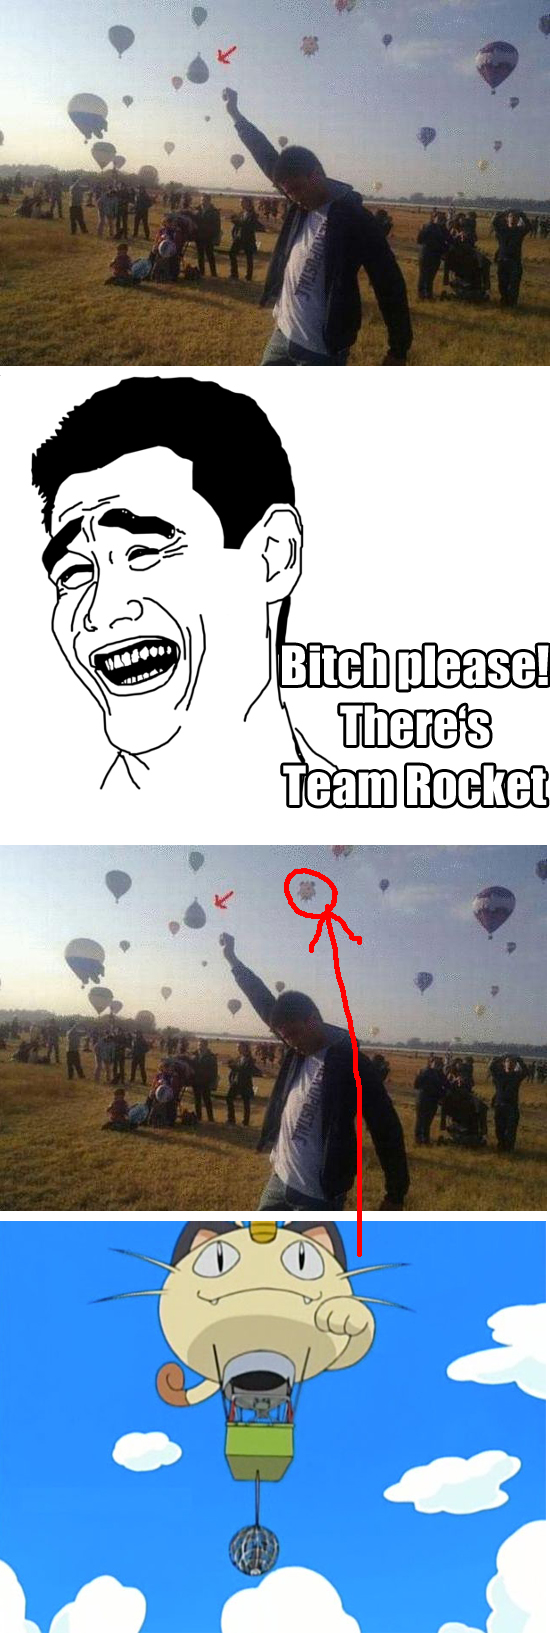 Team Rocket is coming!